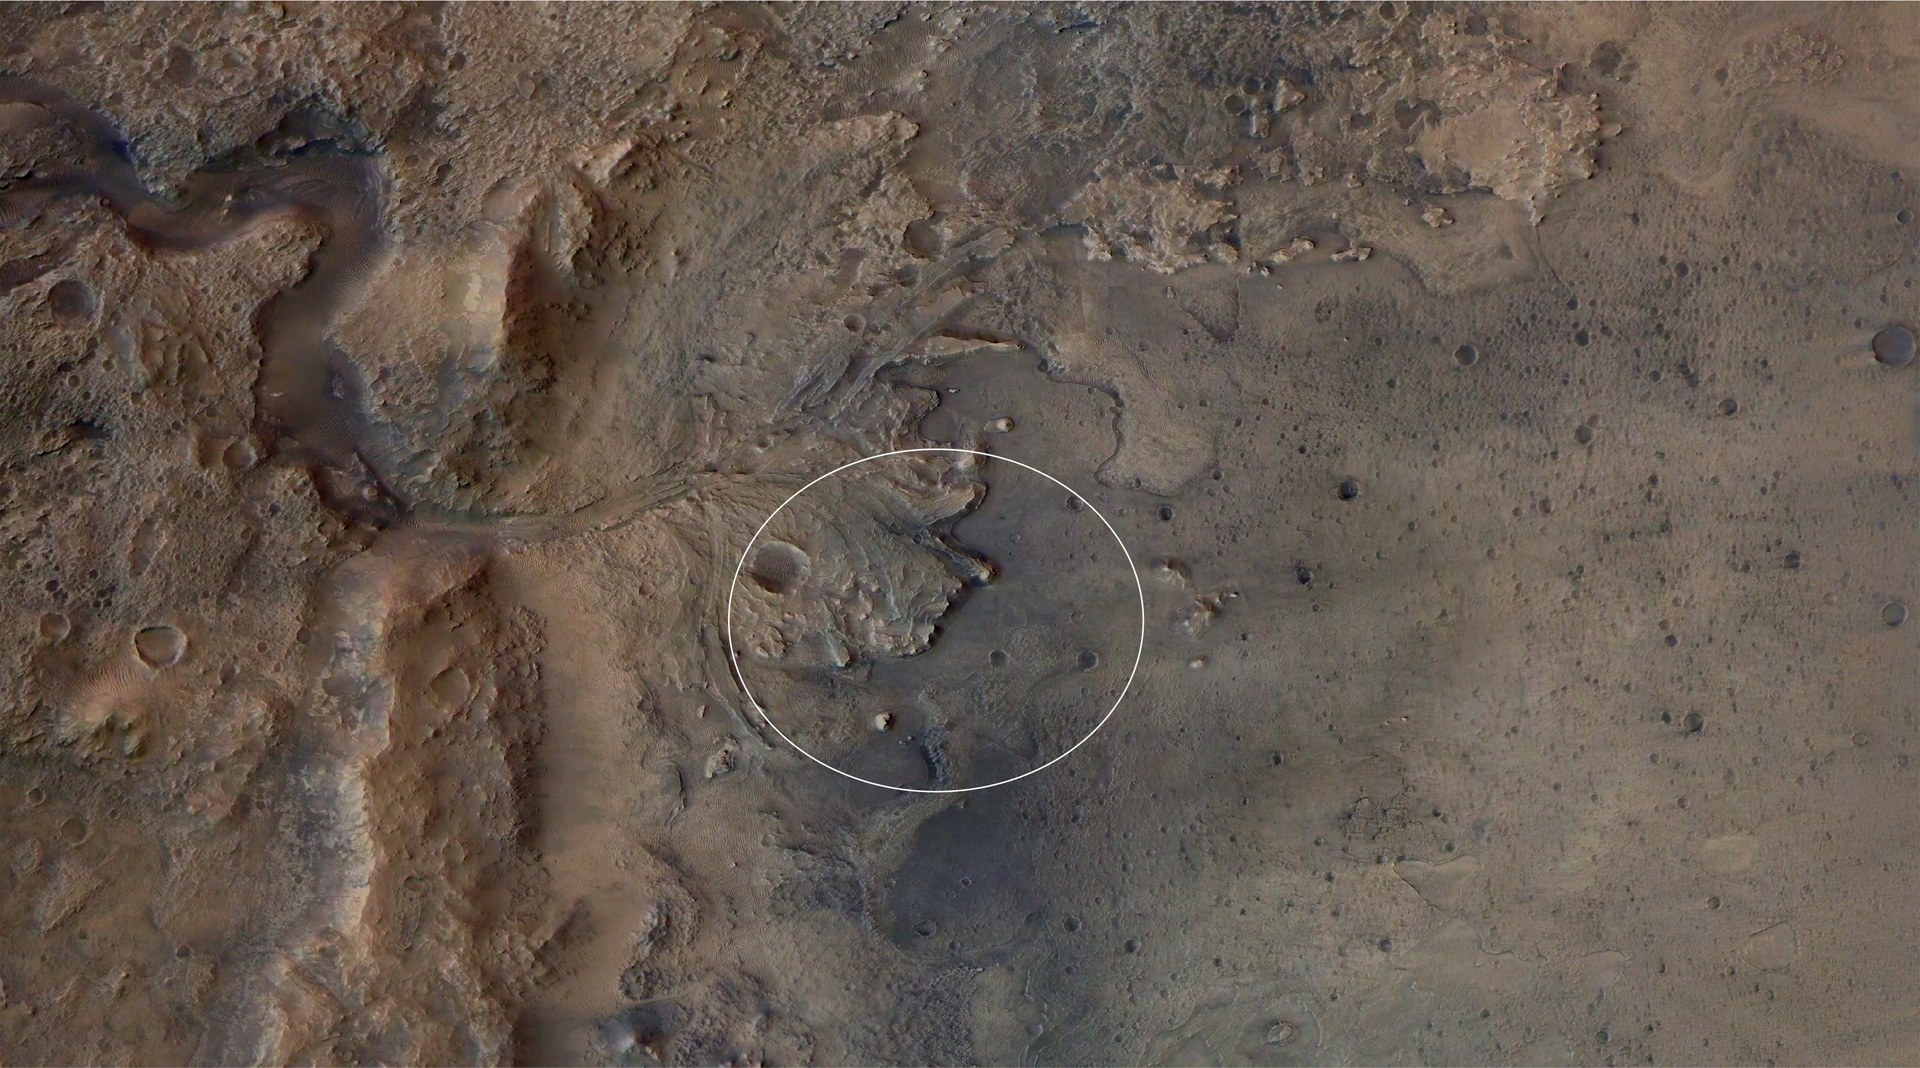 Mars 2020 landing ellipse in Jezero Crater